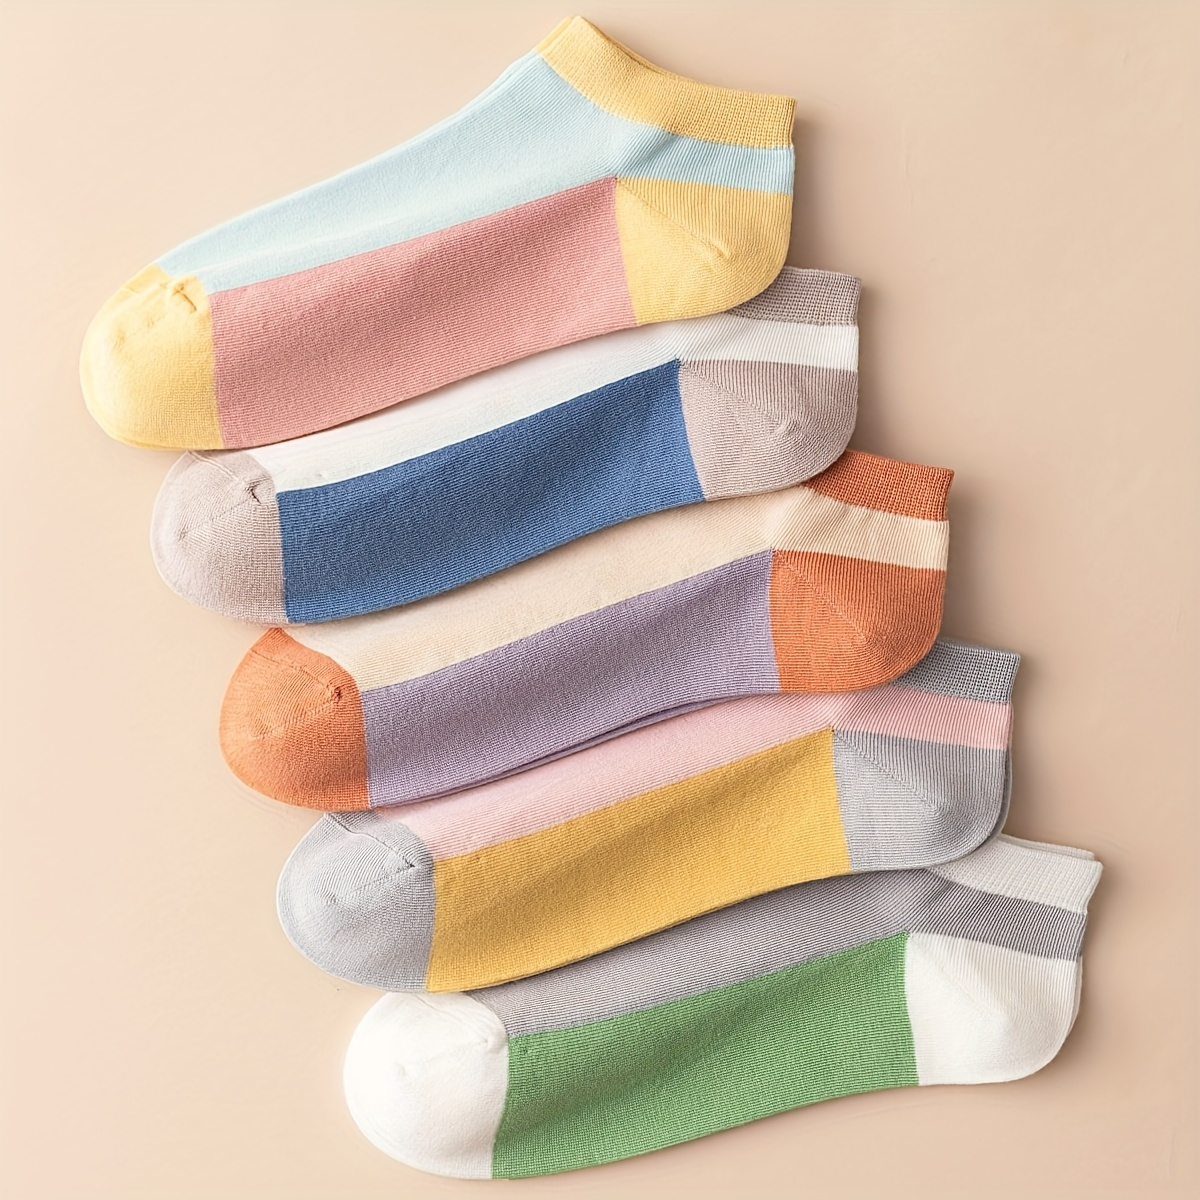 

5 Pairs Colorblock Ankle Socks, Cute & Funny Low Cut Crew Socks, Women's Stockings & Hosiery